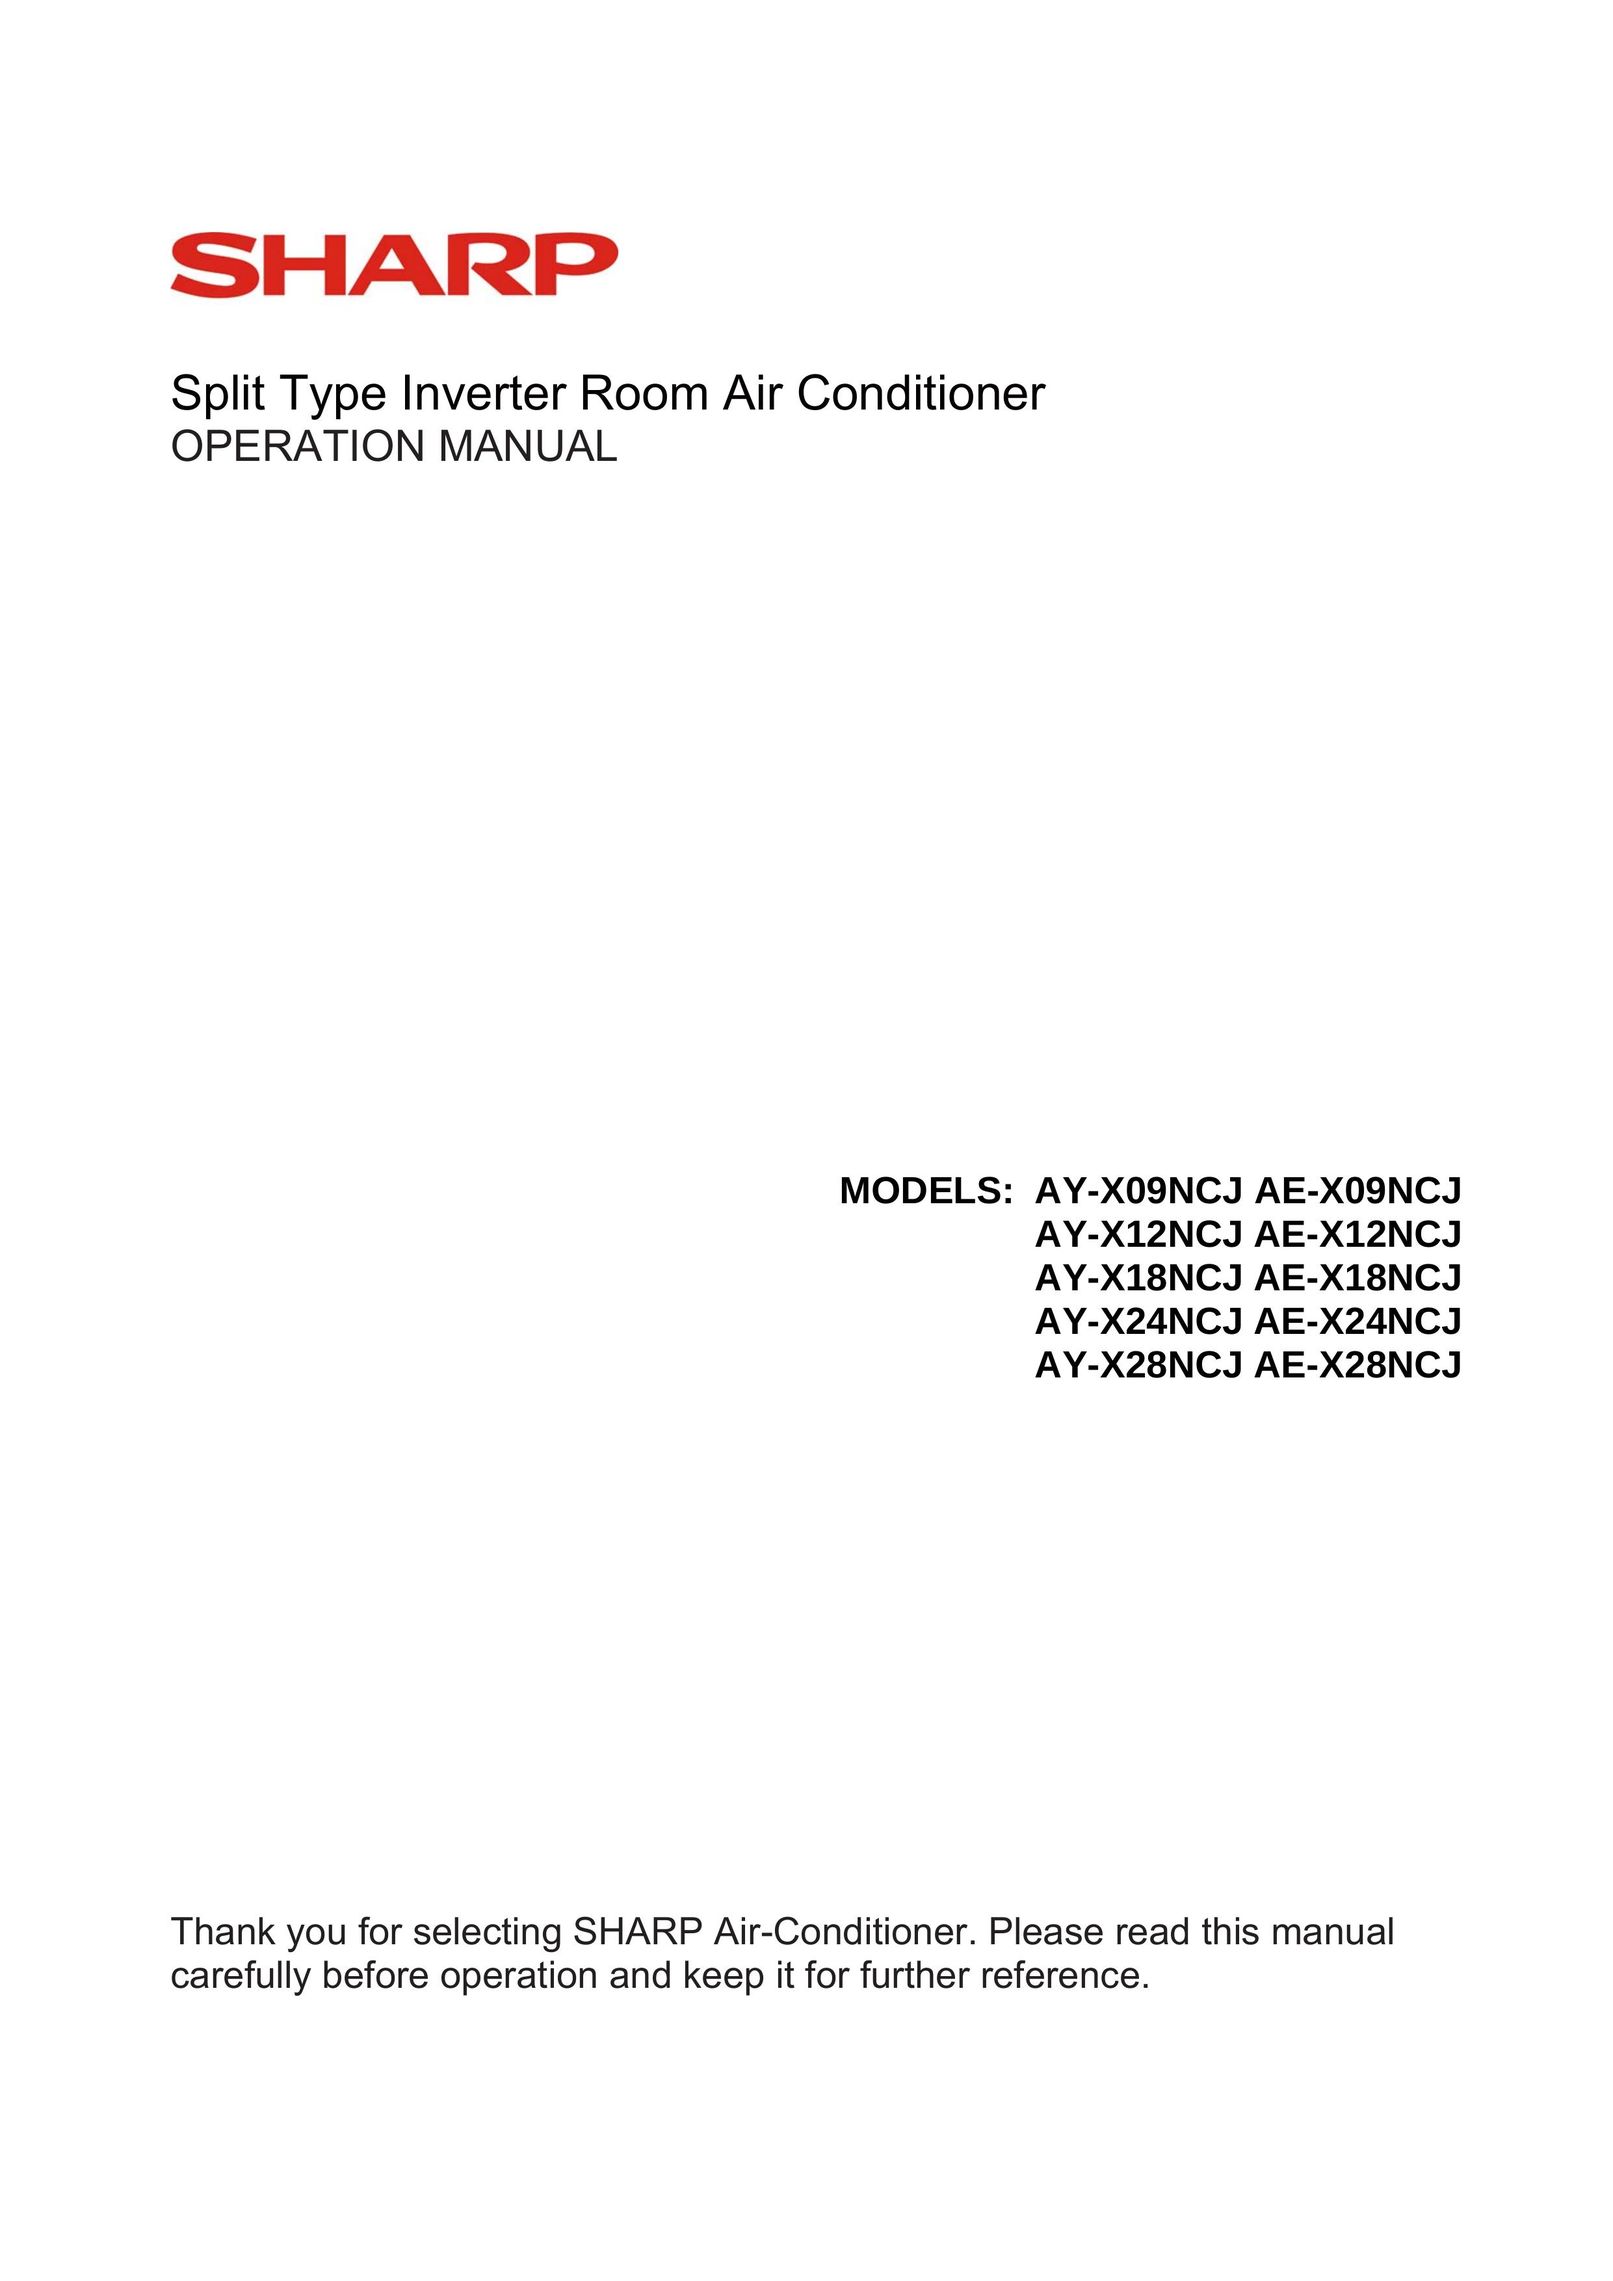 Sharp AE-X12NCJ Air Conditioner User Manual